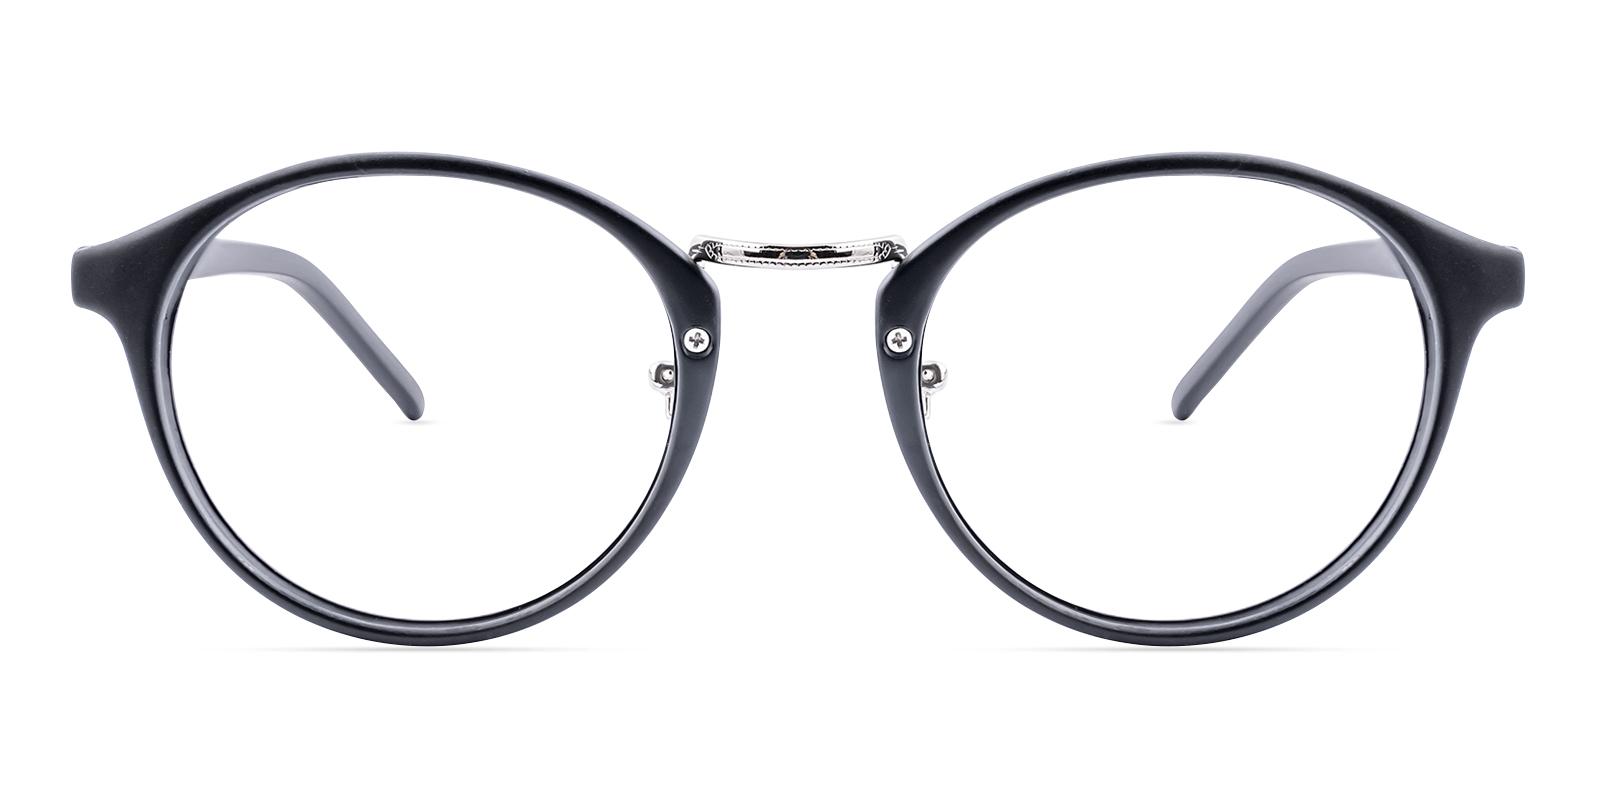 Youngitive Matte-black Plastic Eyeglasses , NosePads Frames from ABBE Glasses